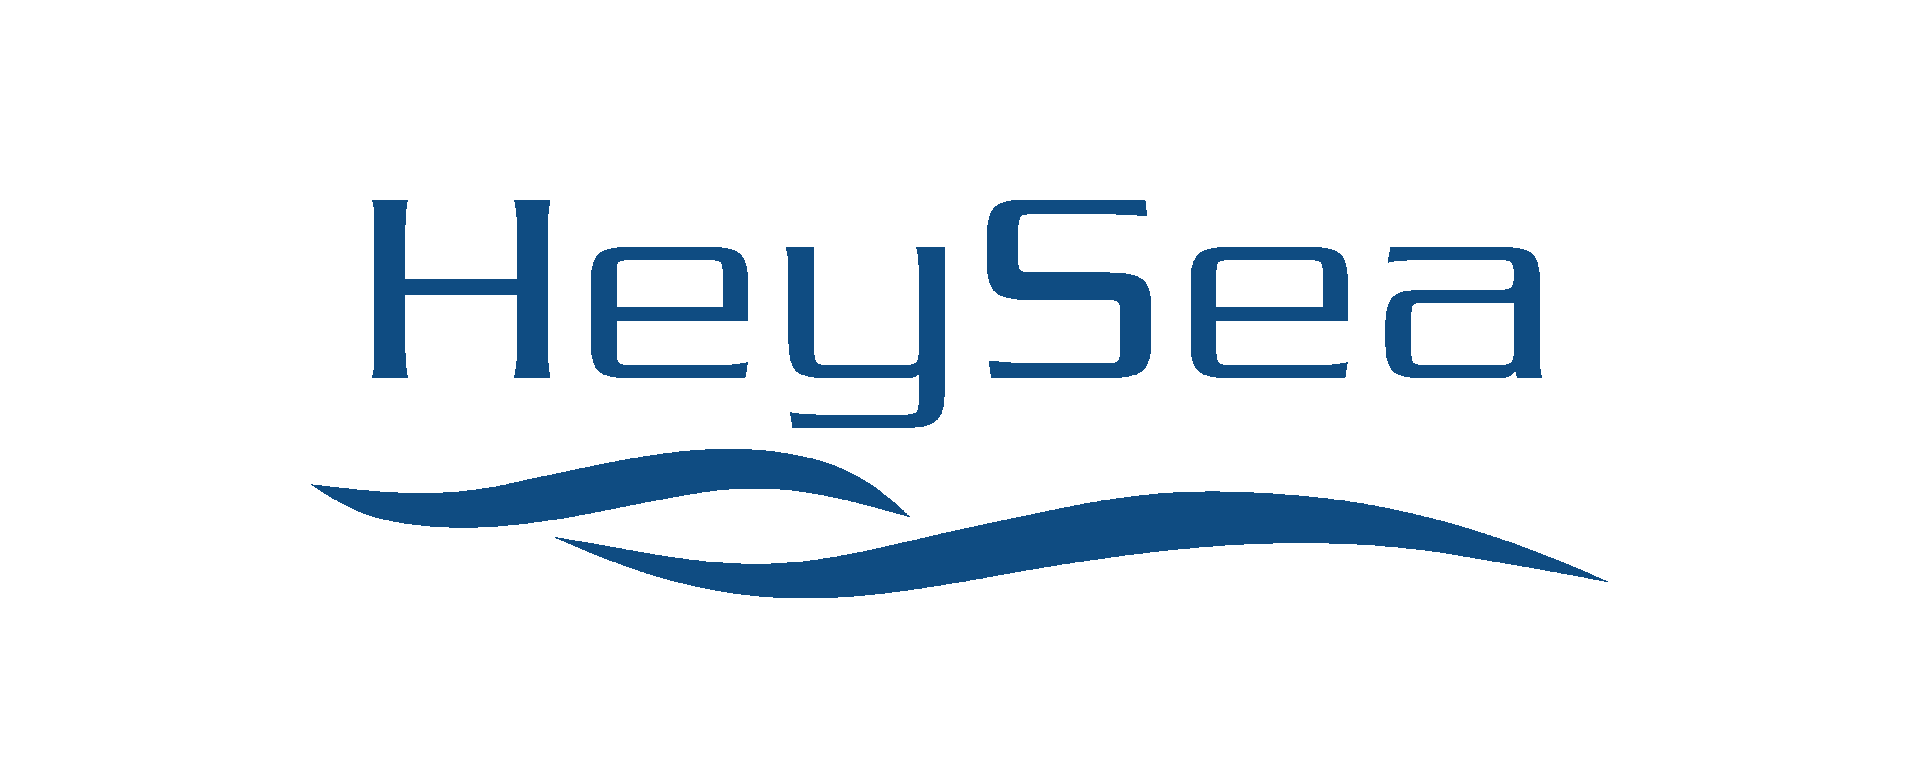 heysea logo  标准色.png